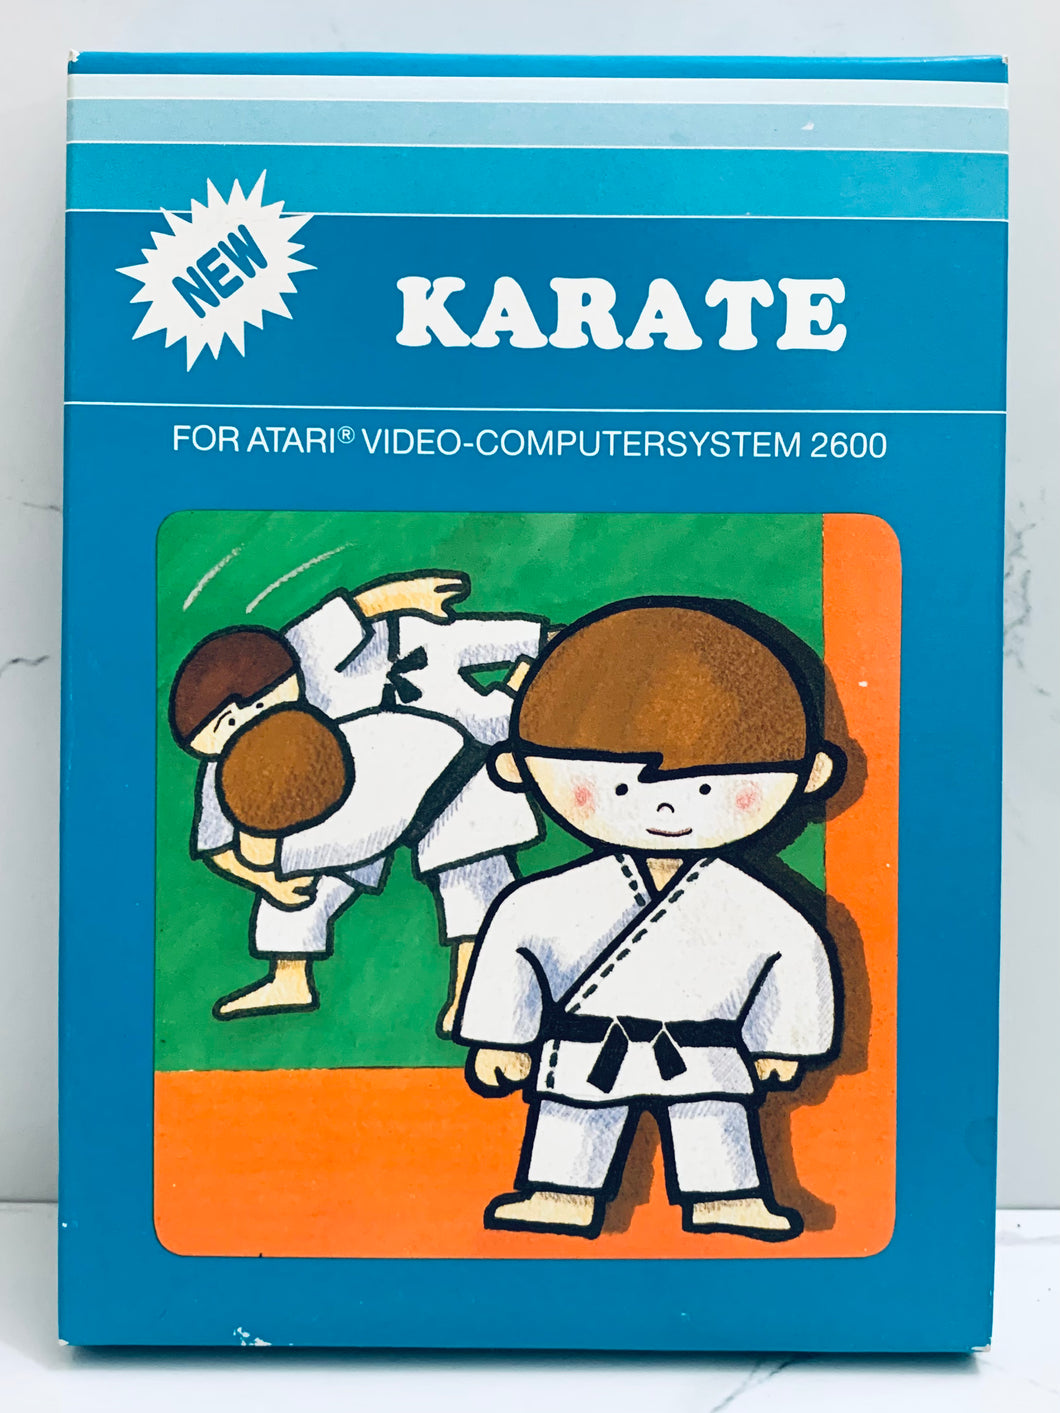 Karate - Atari VCS 2600 - NTSC - CIB